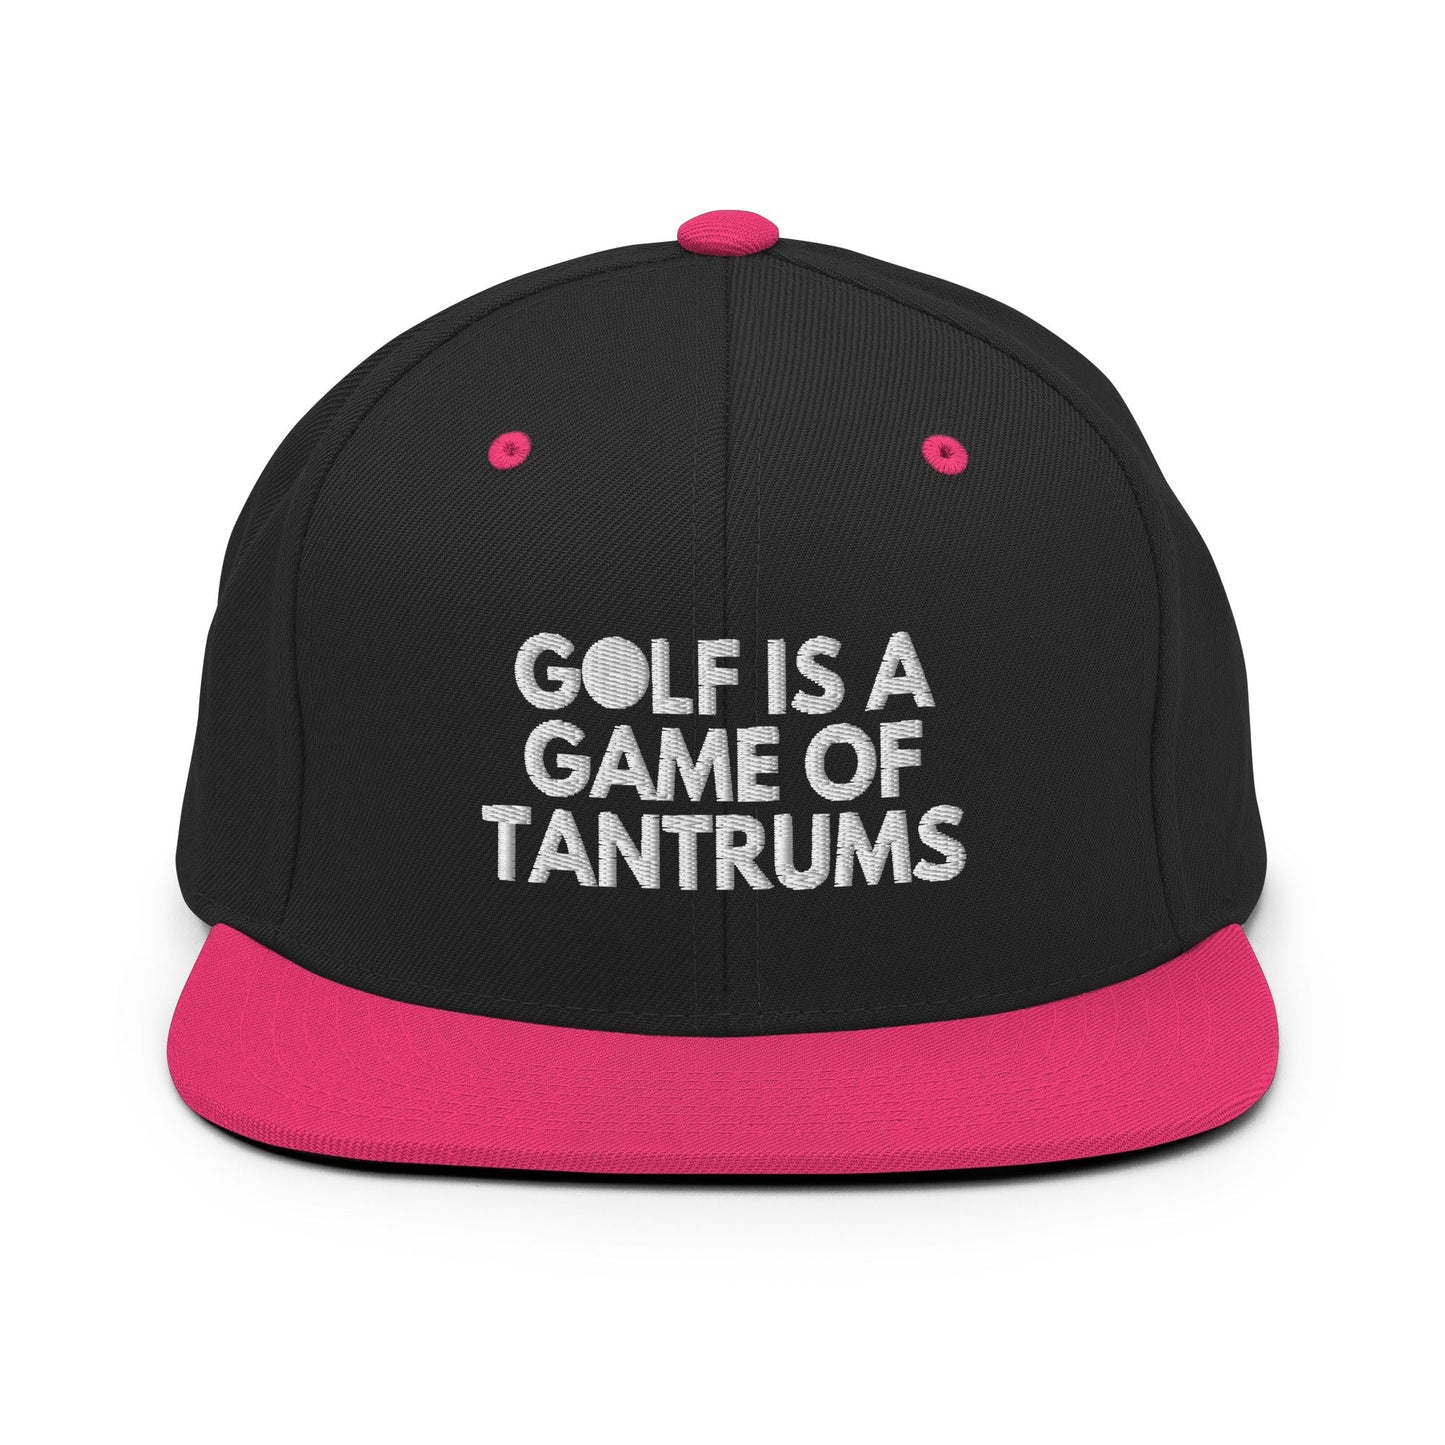 Funny Golfer Gifts  Snapback Hat Black/ Neon Pink Golf Is A Game Of Tantrums Hat Snapback Hat